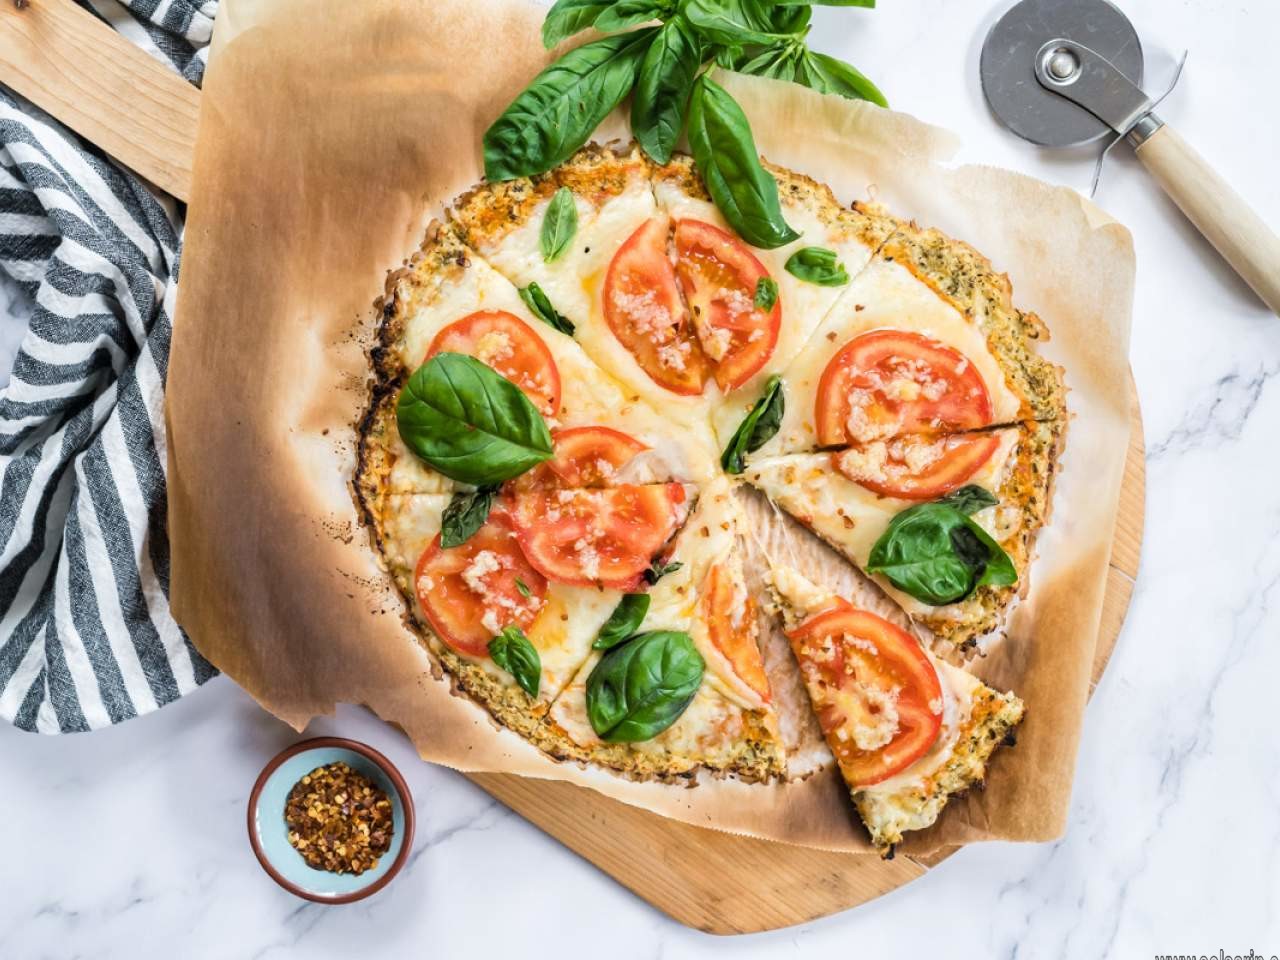 califlour foods cauliflower pizza crust original italian